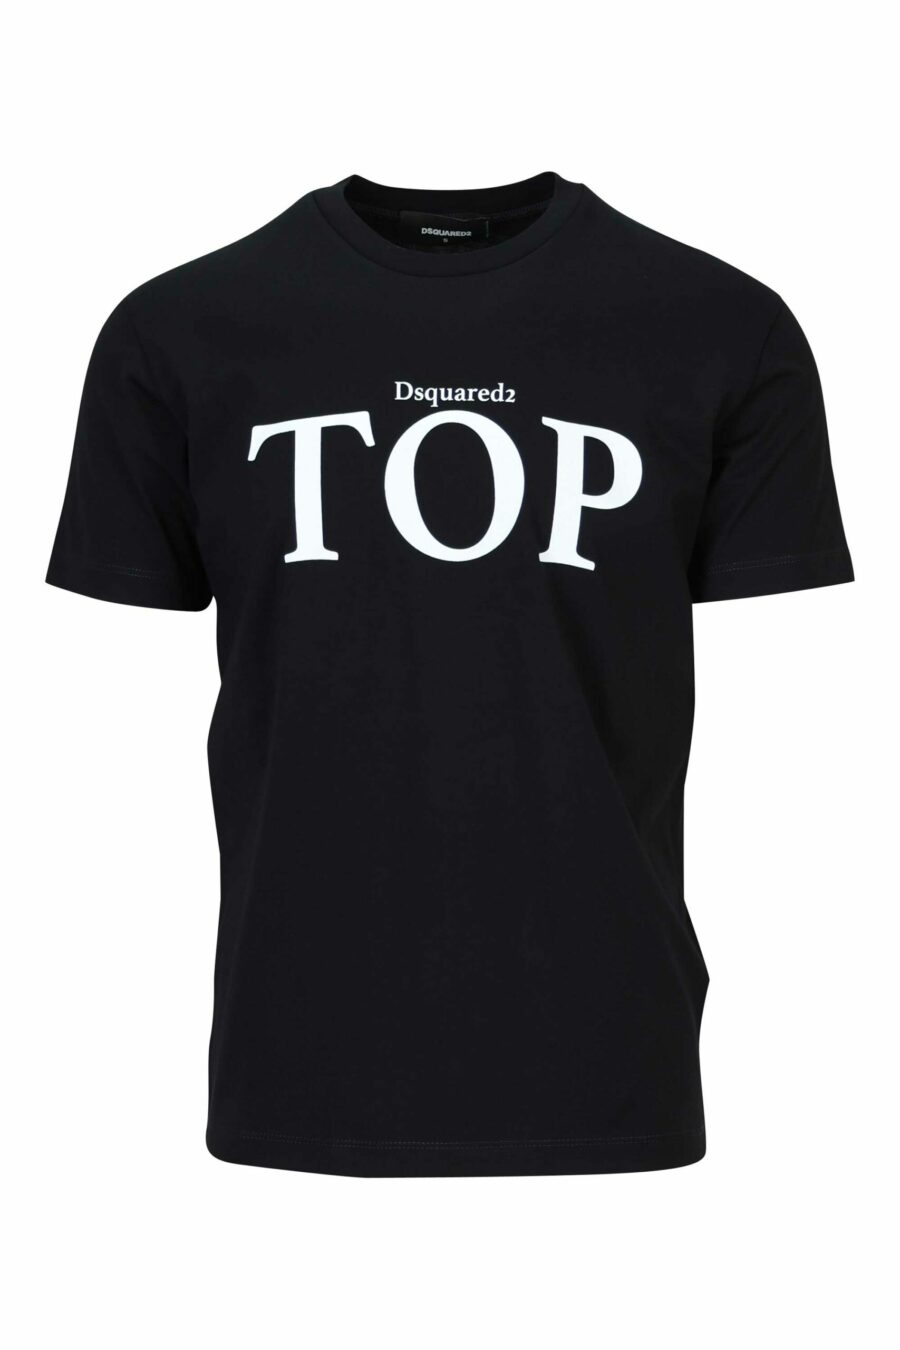 T-shirt noir avec maxilogo "top" - 8054148570927 en échelle